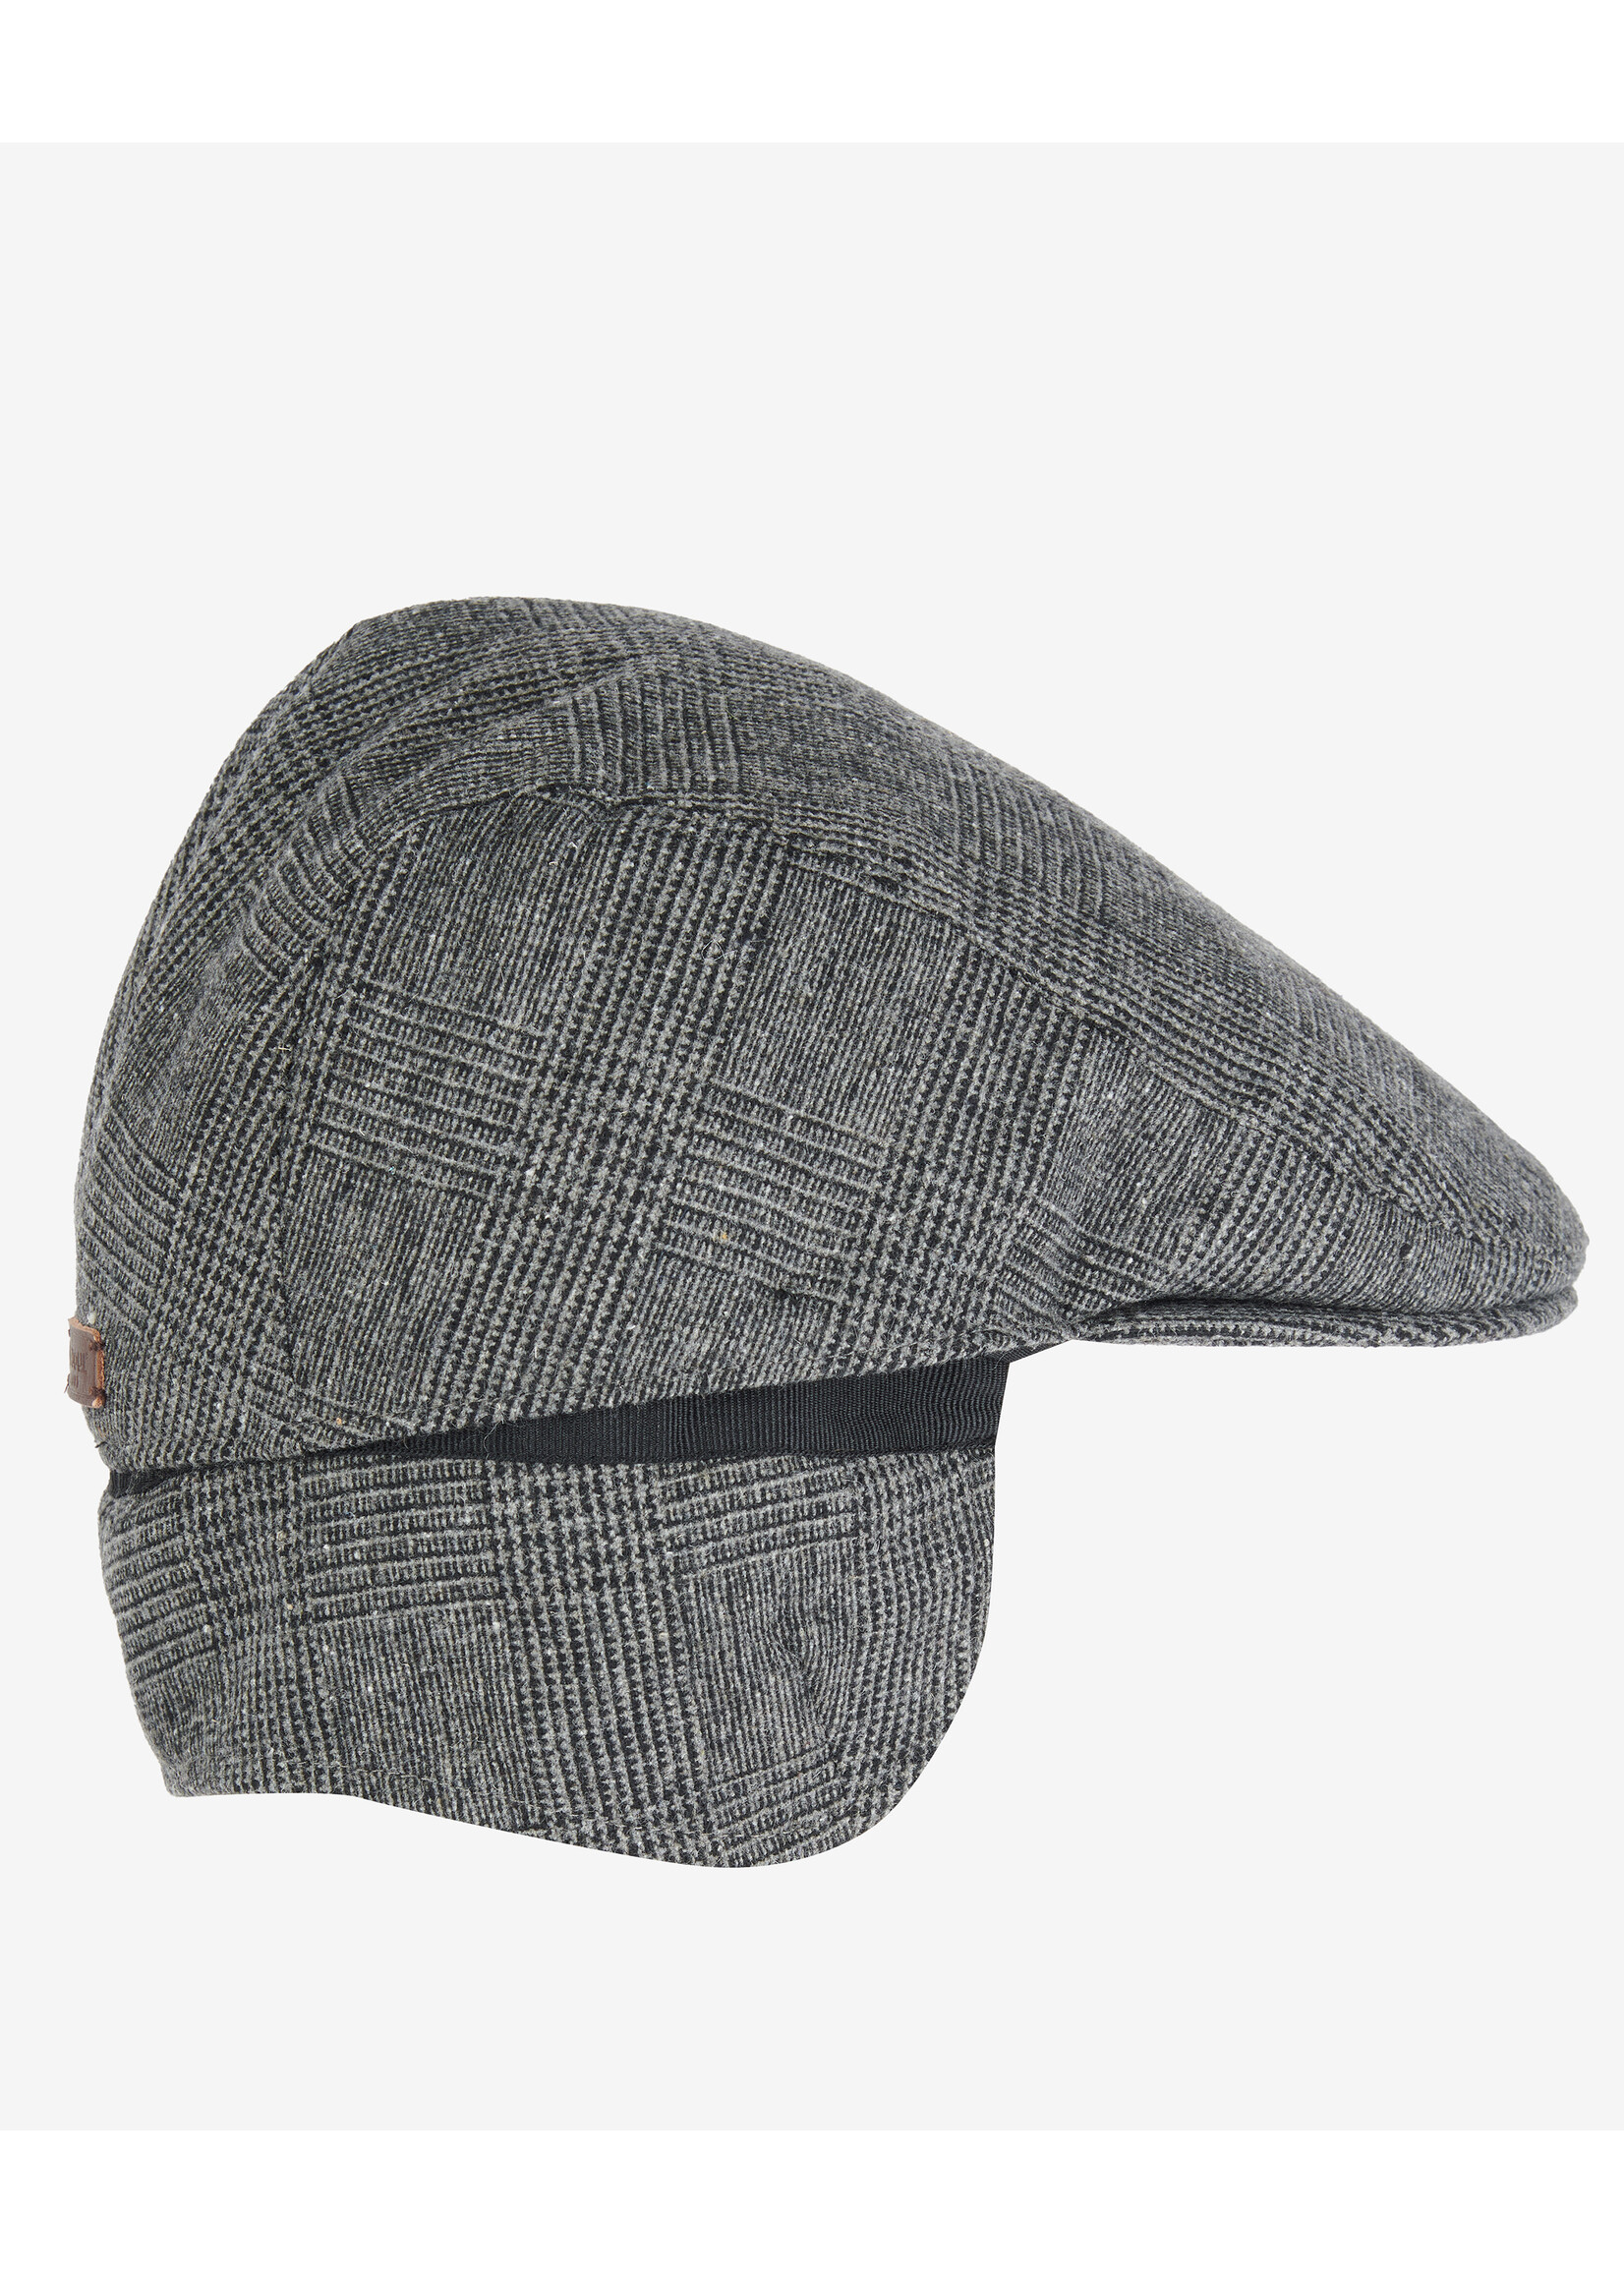 Barbour CHEVIOT FLAT CAP